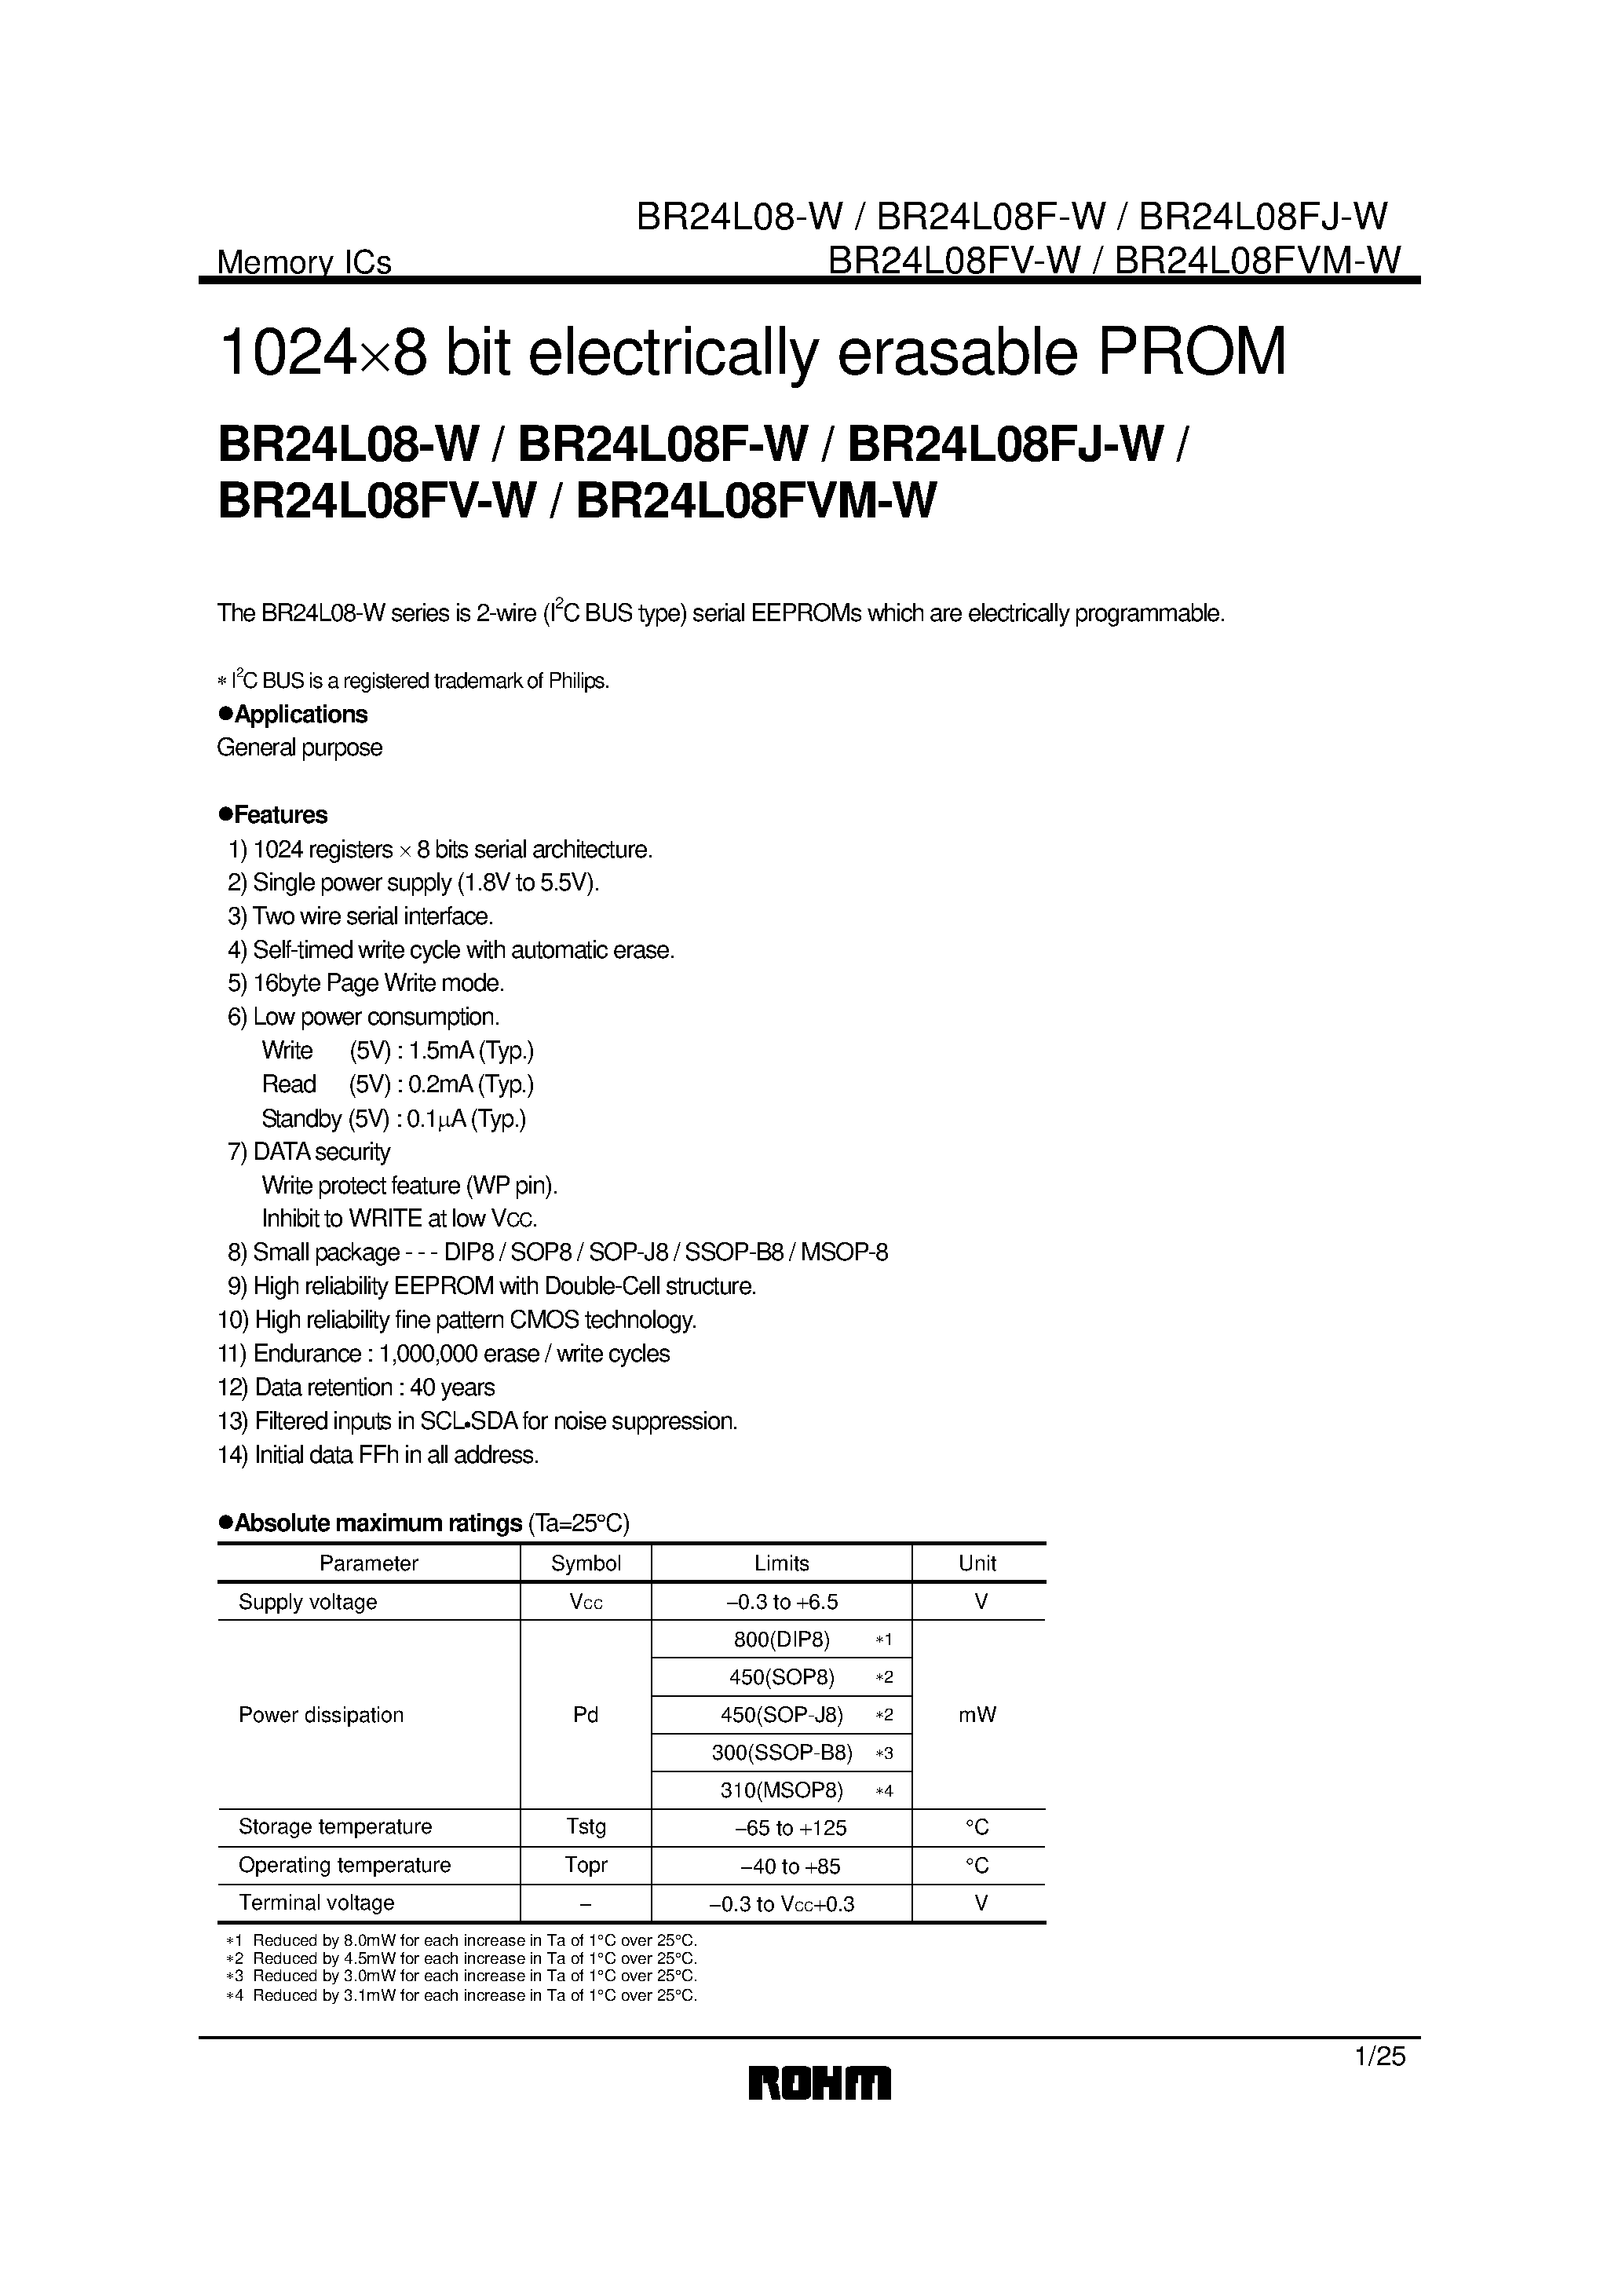 Datasheet BR24L08F-W - 10248 bit electrically erasable PROM page 1